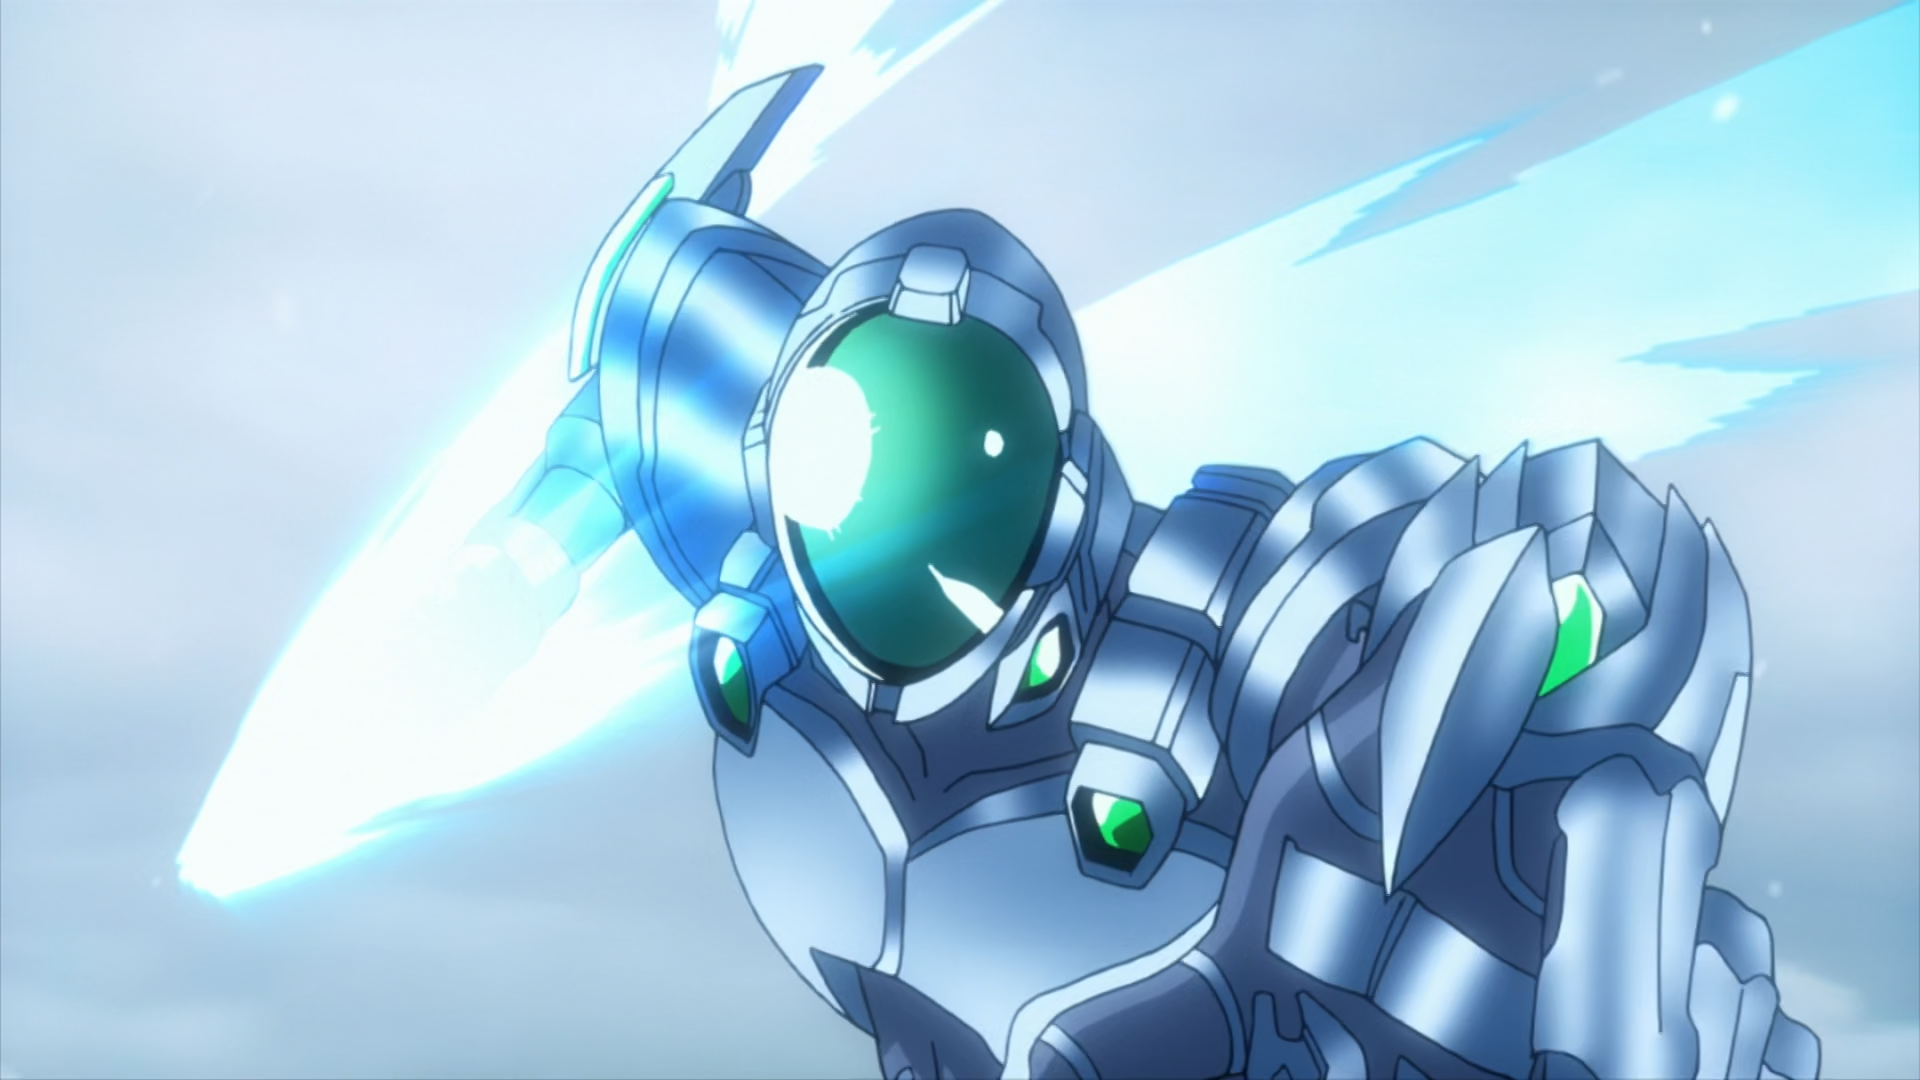 Anime Laser Engraved Art - SCARA Robotic Arm - evezor - YouTube